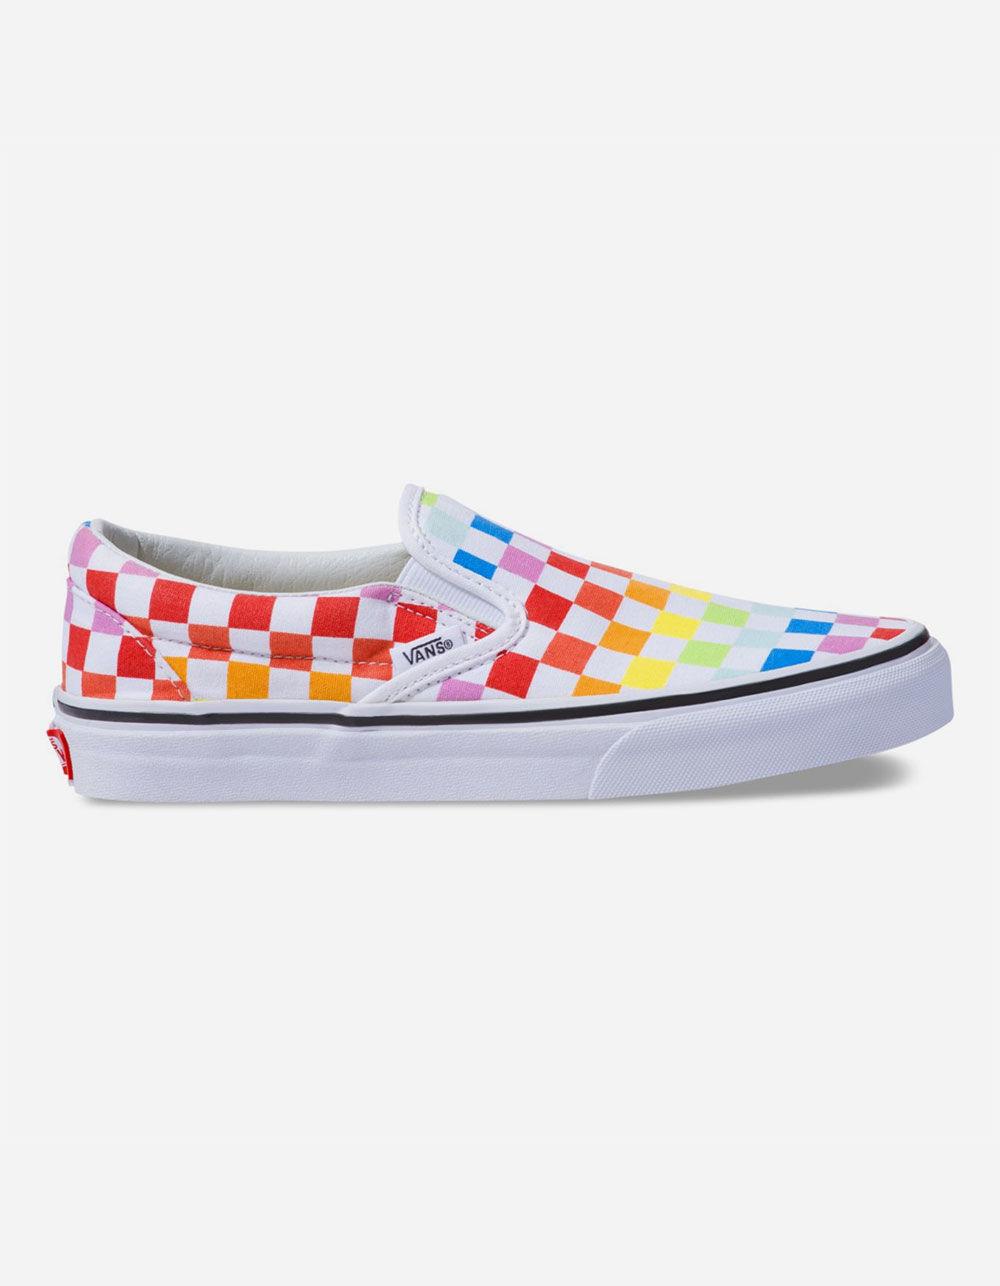 Vans Canvas Checkerboard Slip-on Rainbow Shoes - Lyst